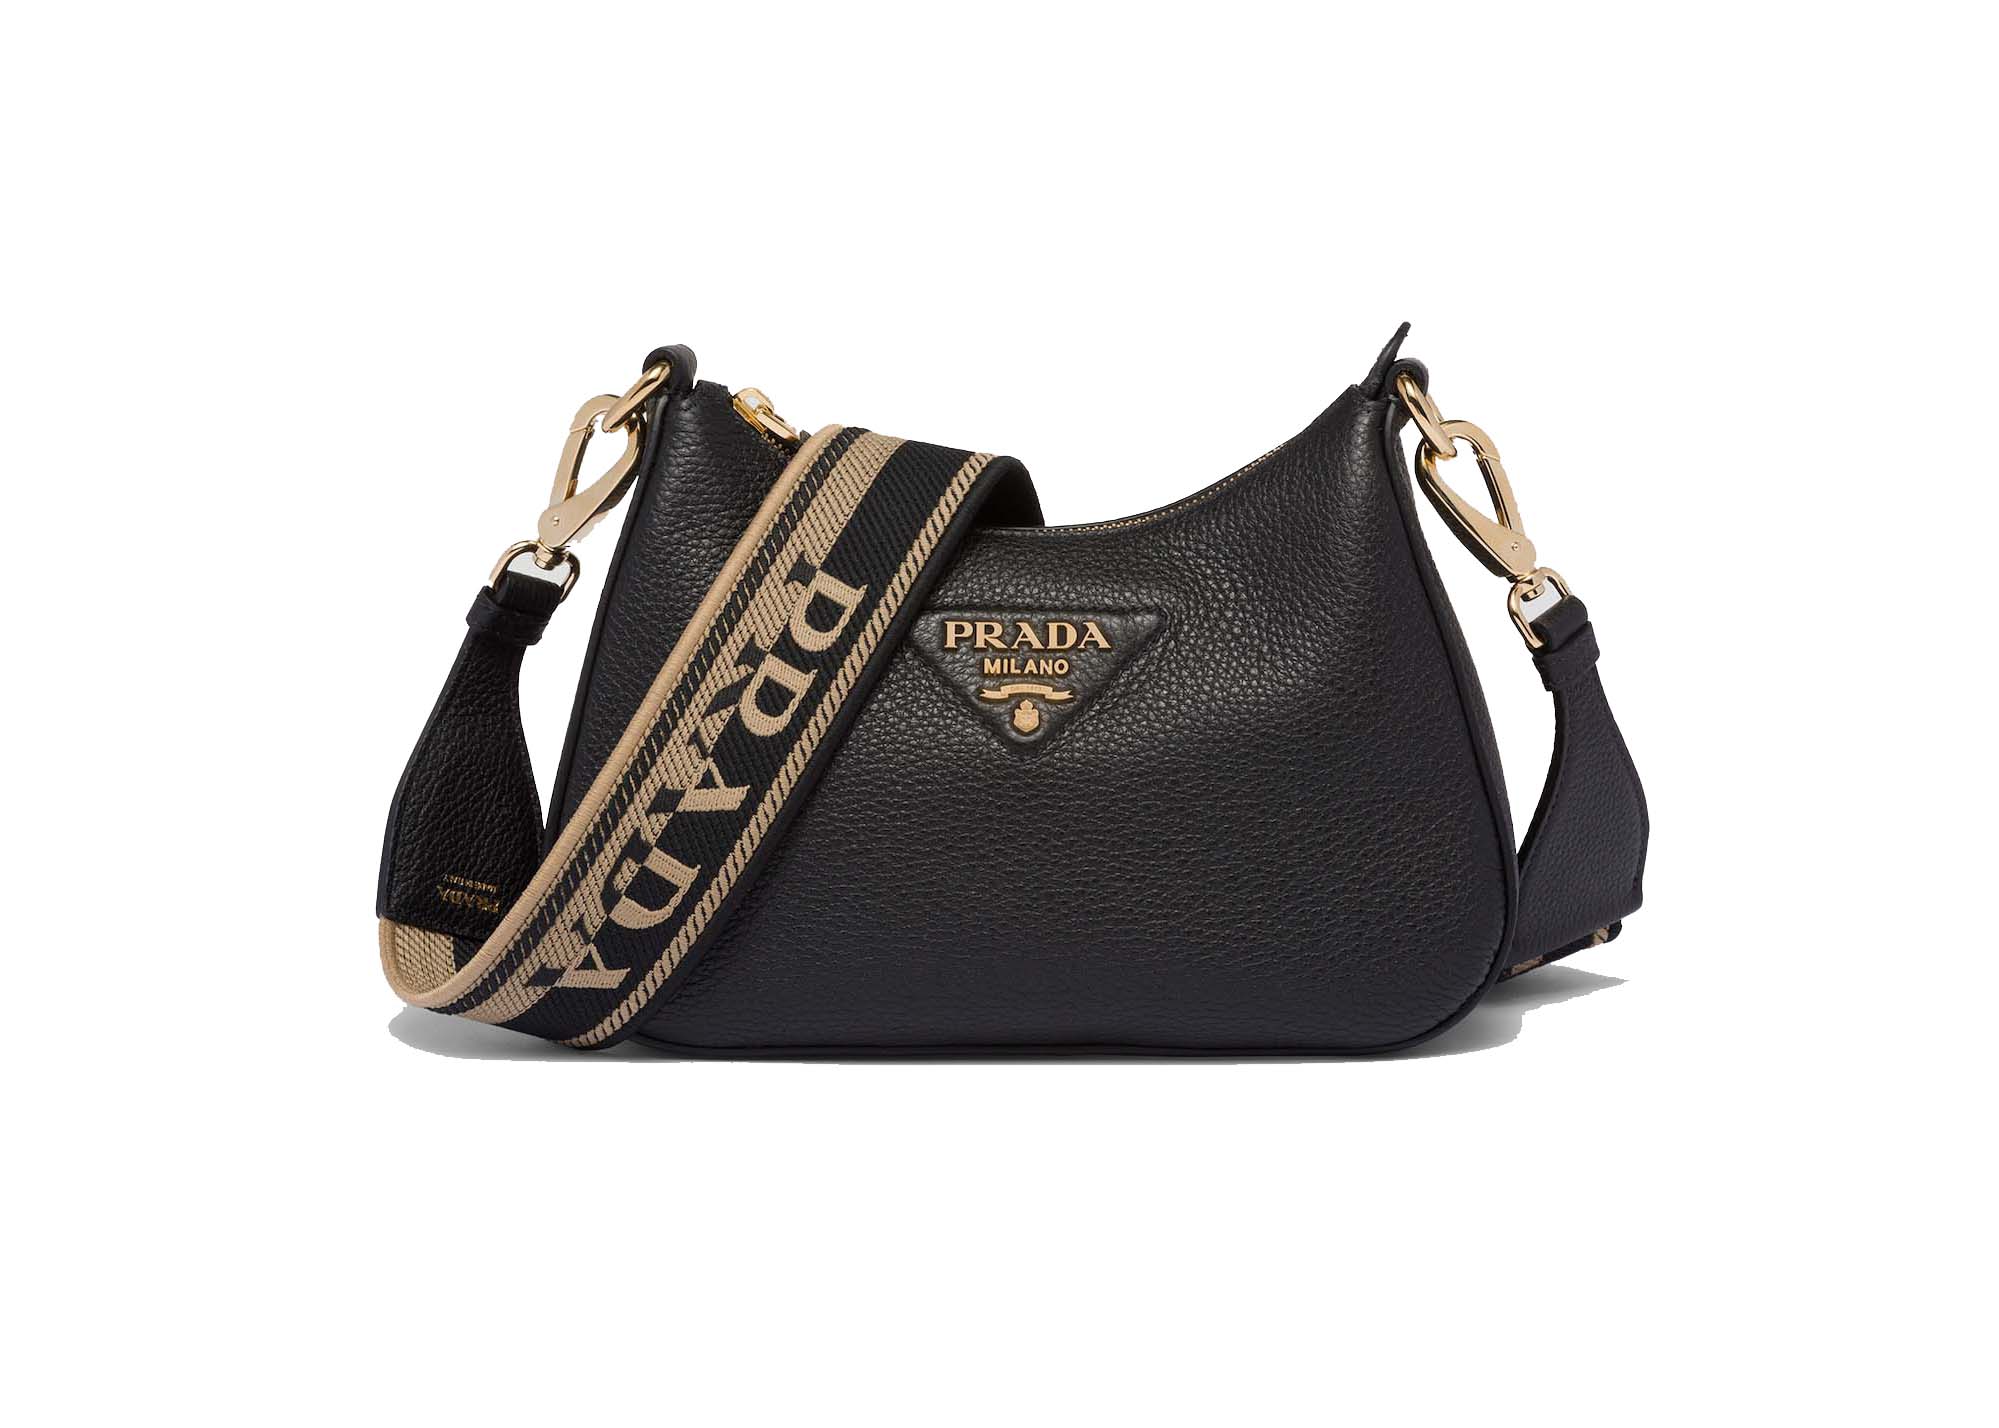 Prada - Prada System Black Leather Patchwork Shoulder Bag